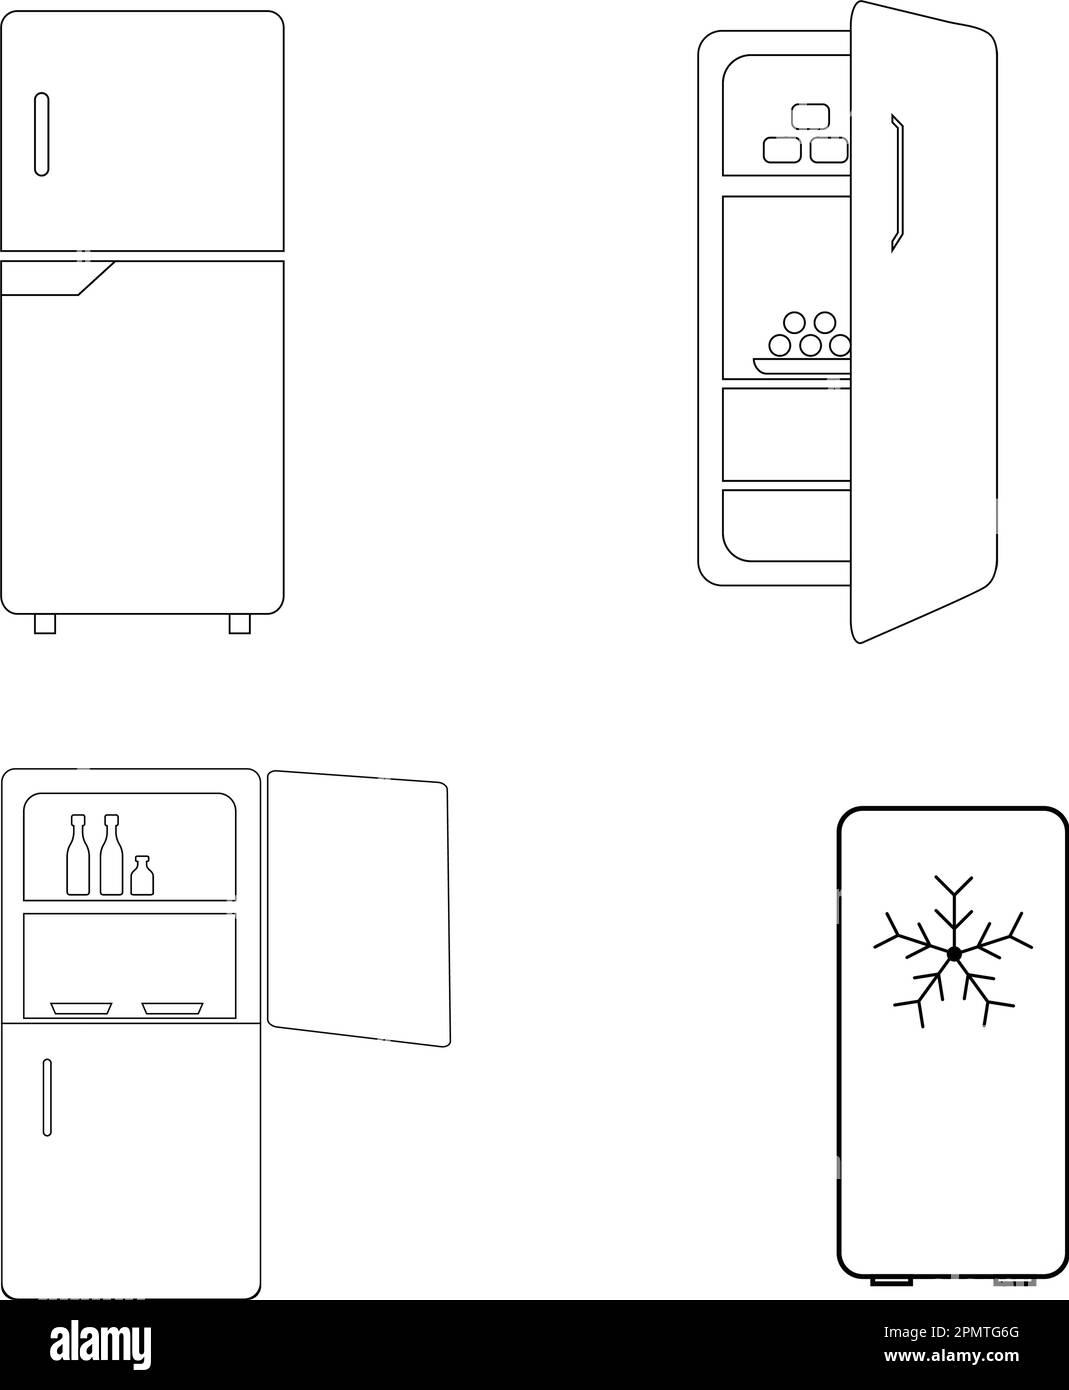 refrigerator icon vector illustration design Stock Vector